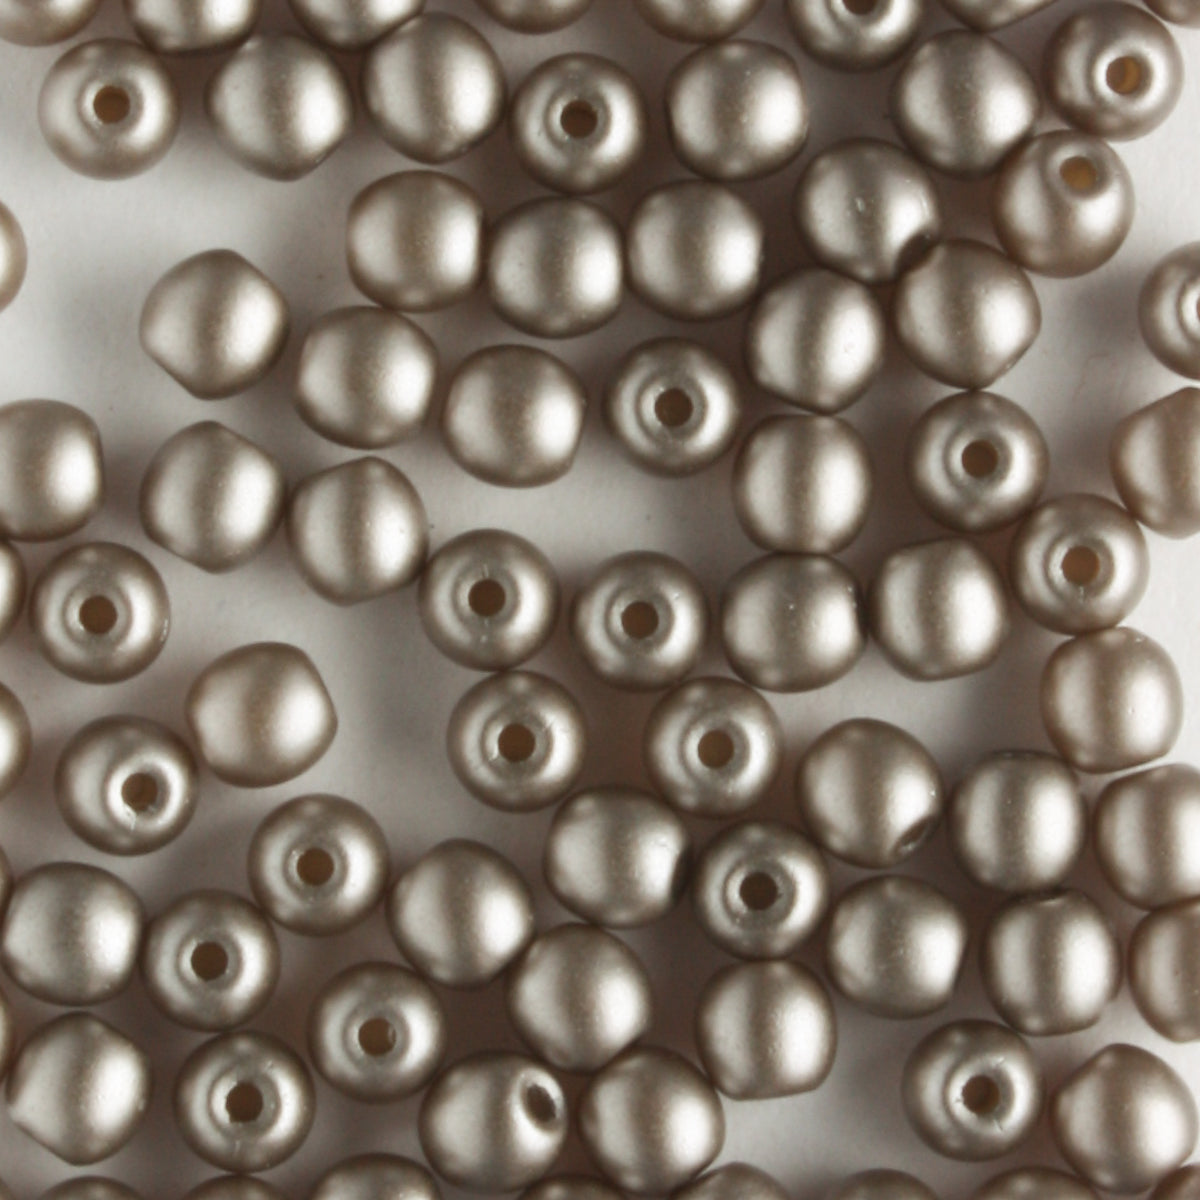 3mm Round Glass Pearls Brown Sugar - 100 beads